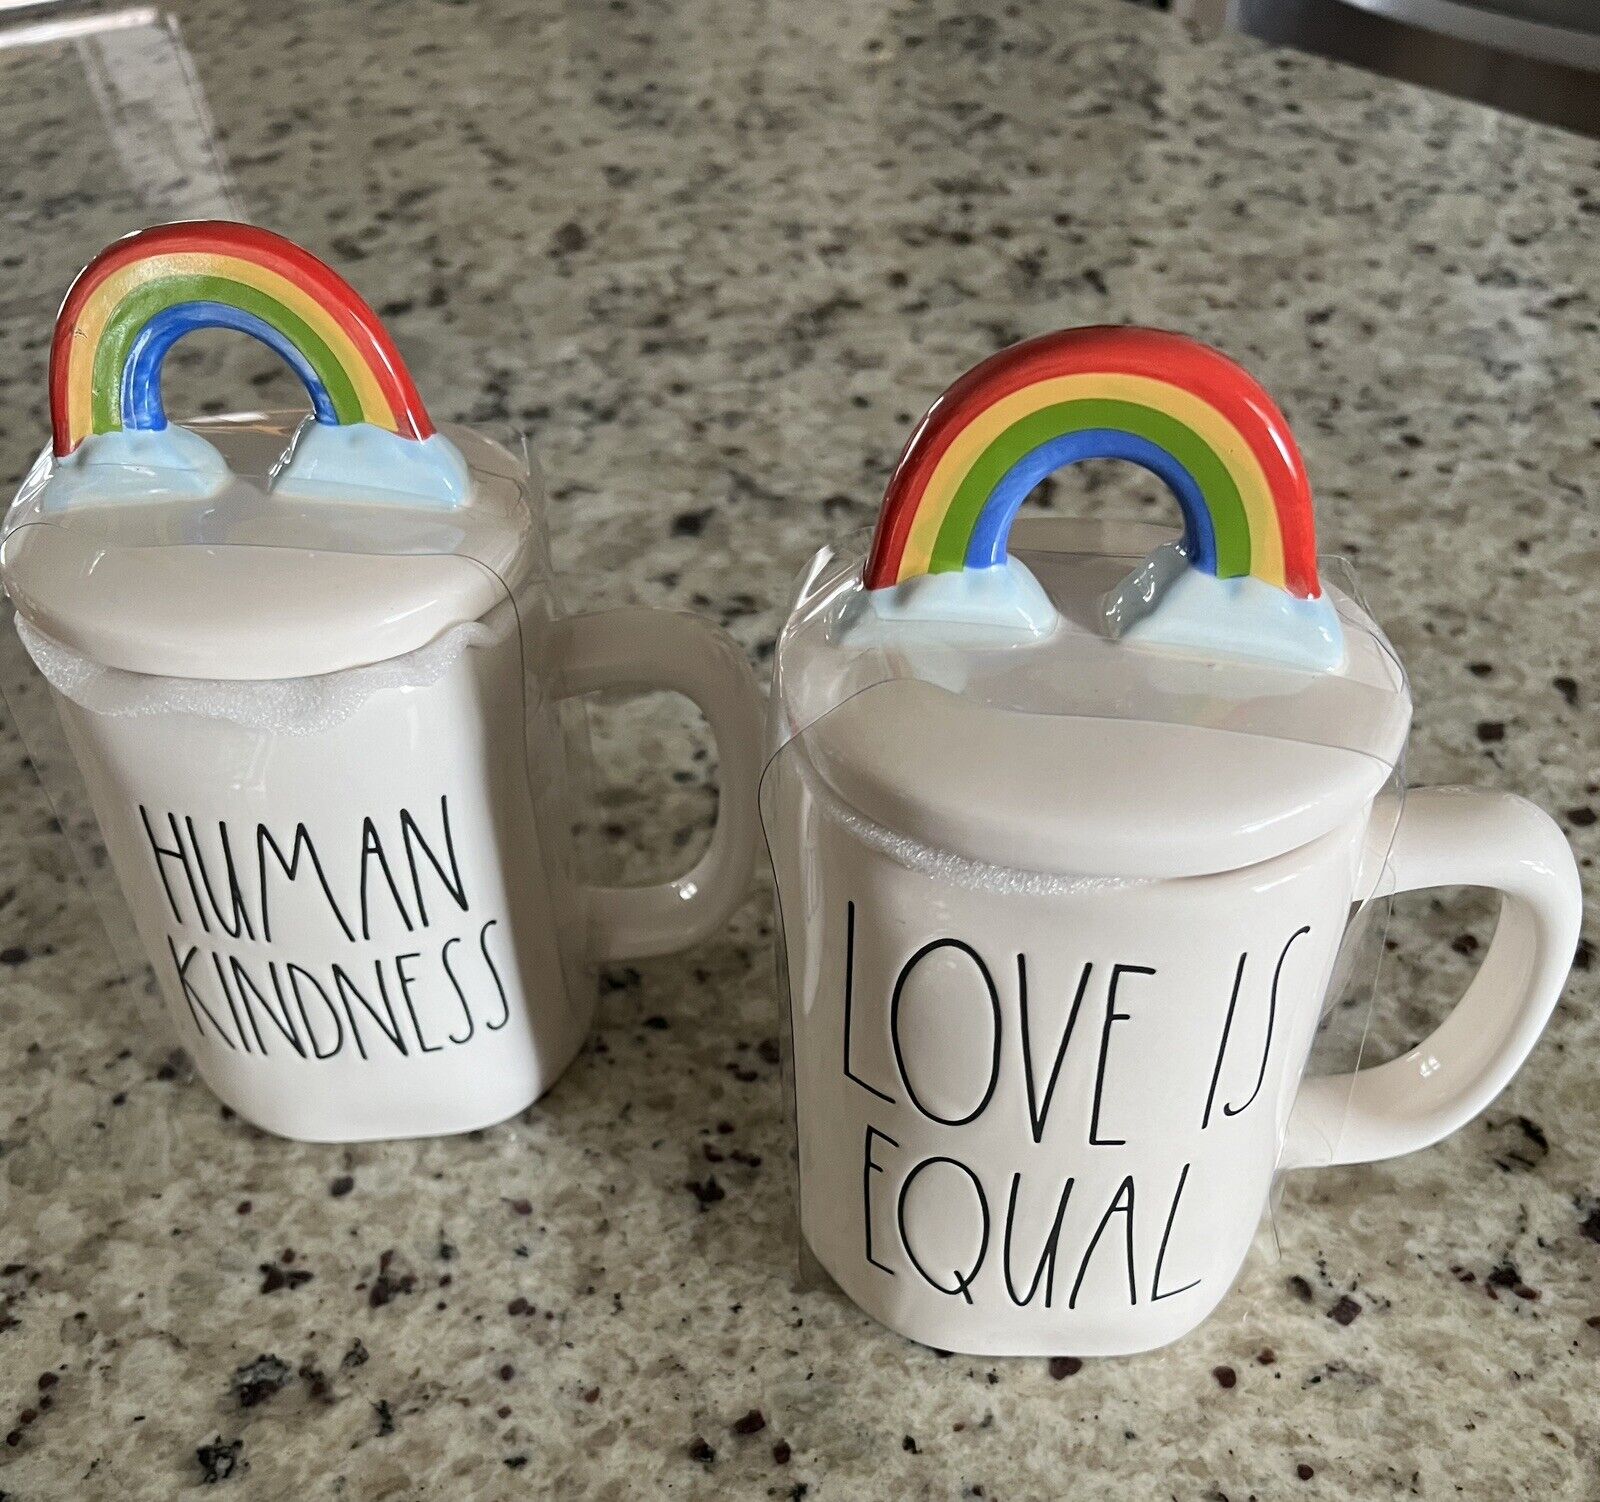 RAE DUNN PRIDE LOVE IS EQUAL & HUMAN KINDNESS Coffee Mugs/Lids